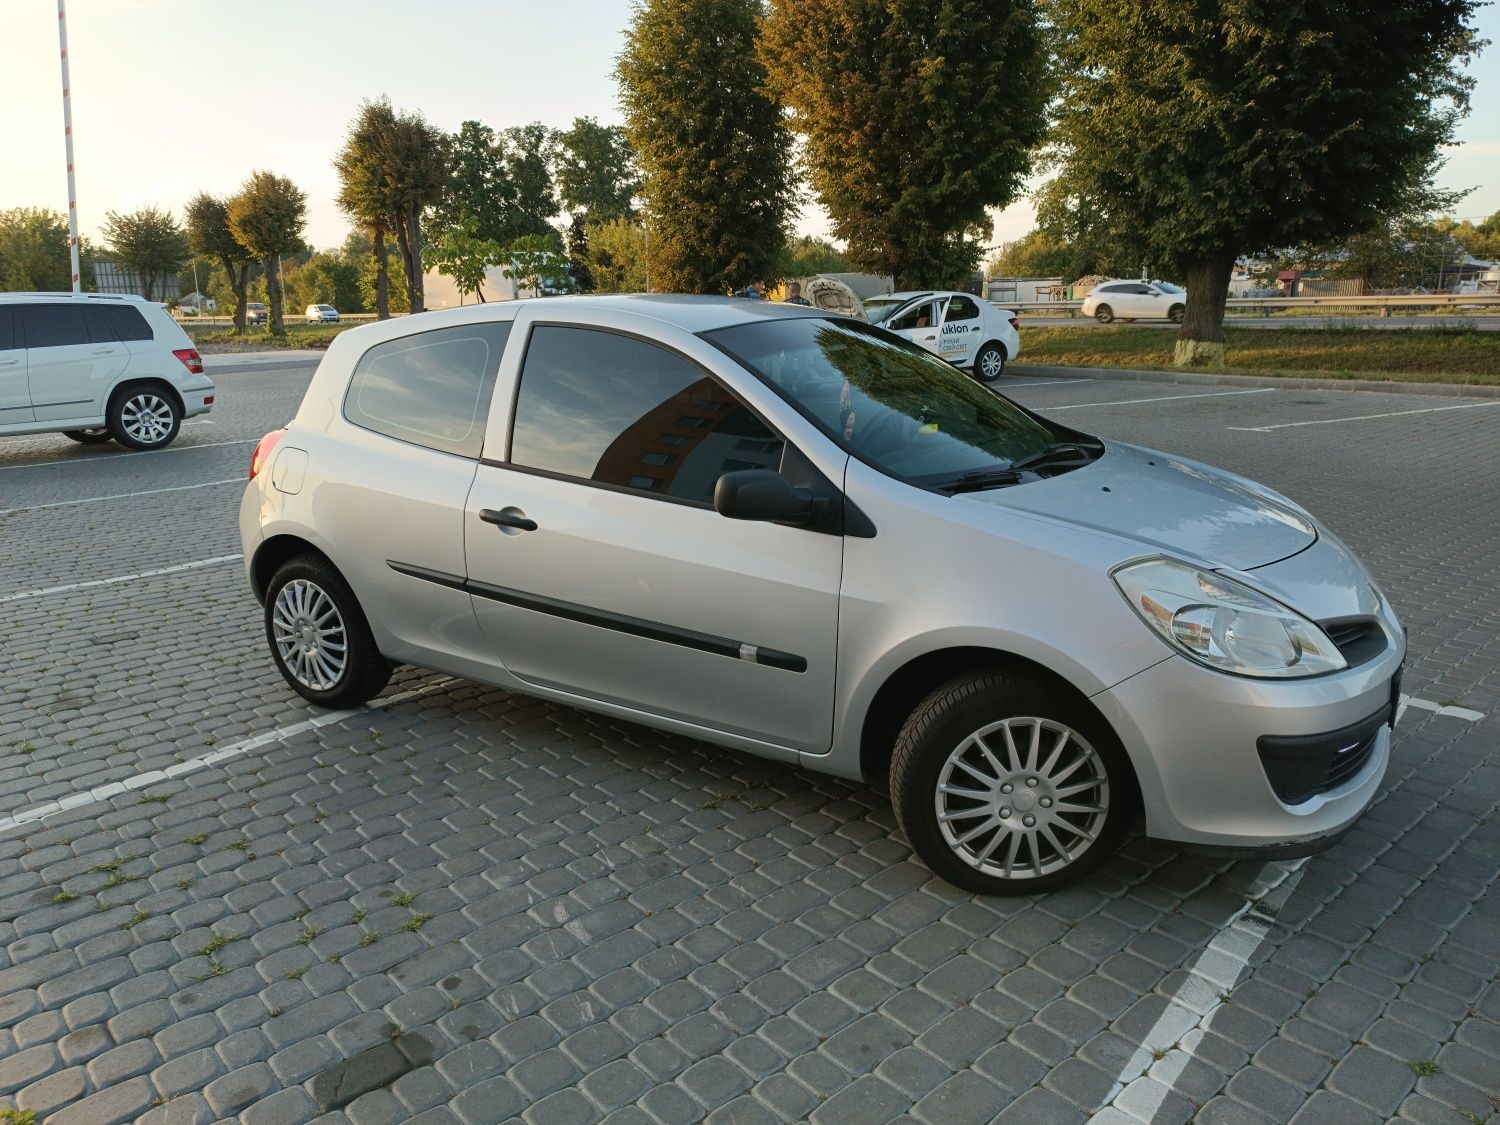 Renault Clio 2005 Europa